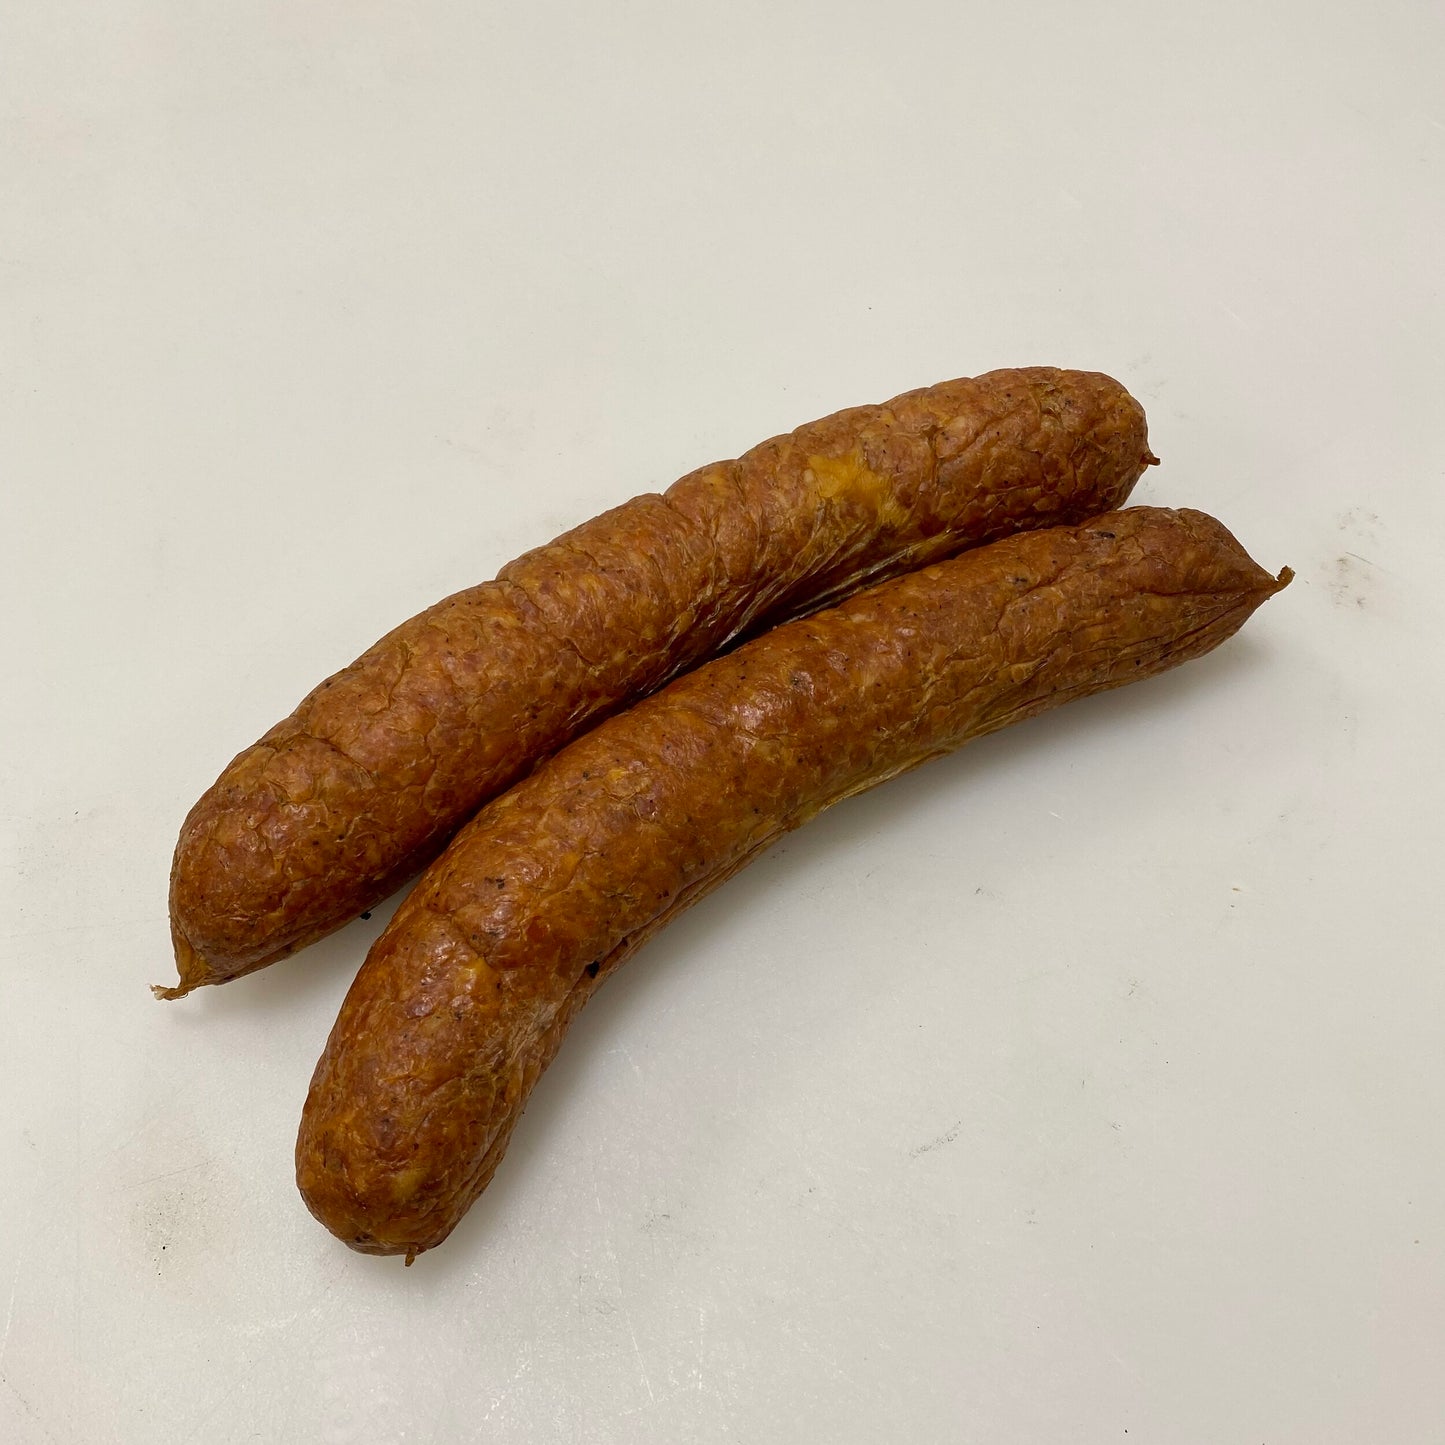 Smoked Andouille Sausage (1 lb.)